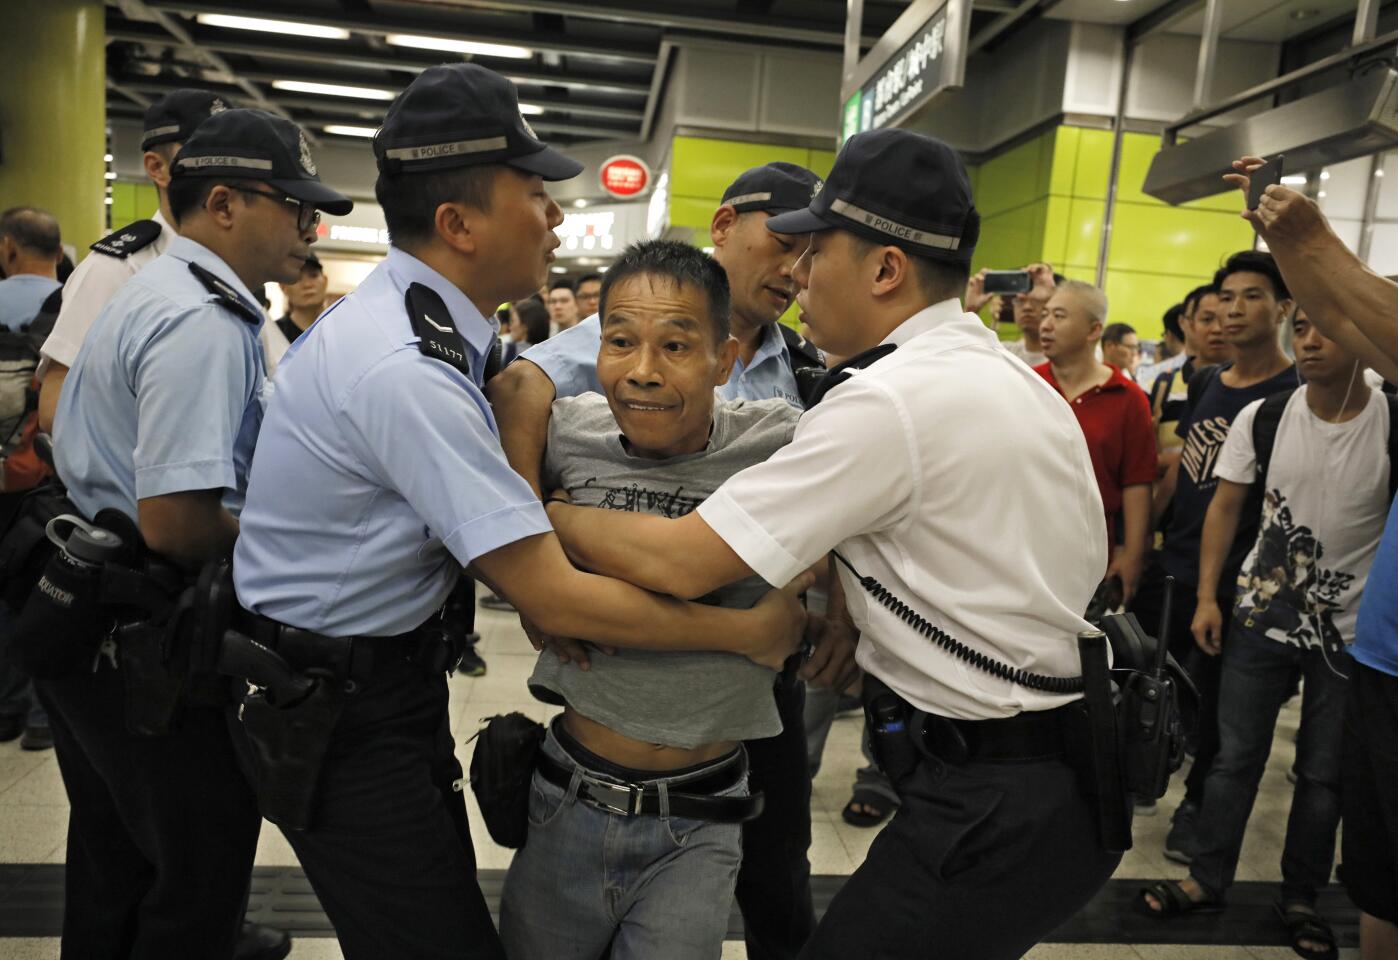 Unrest in Hong Kong